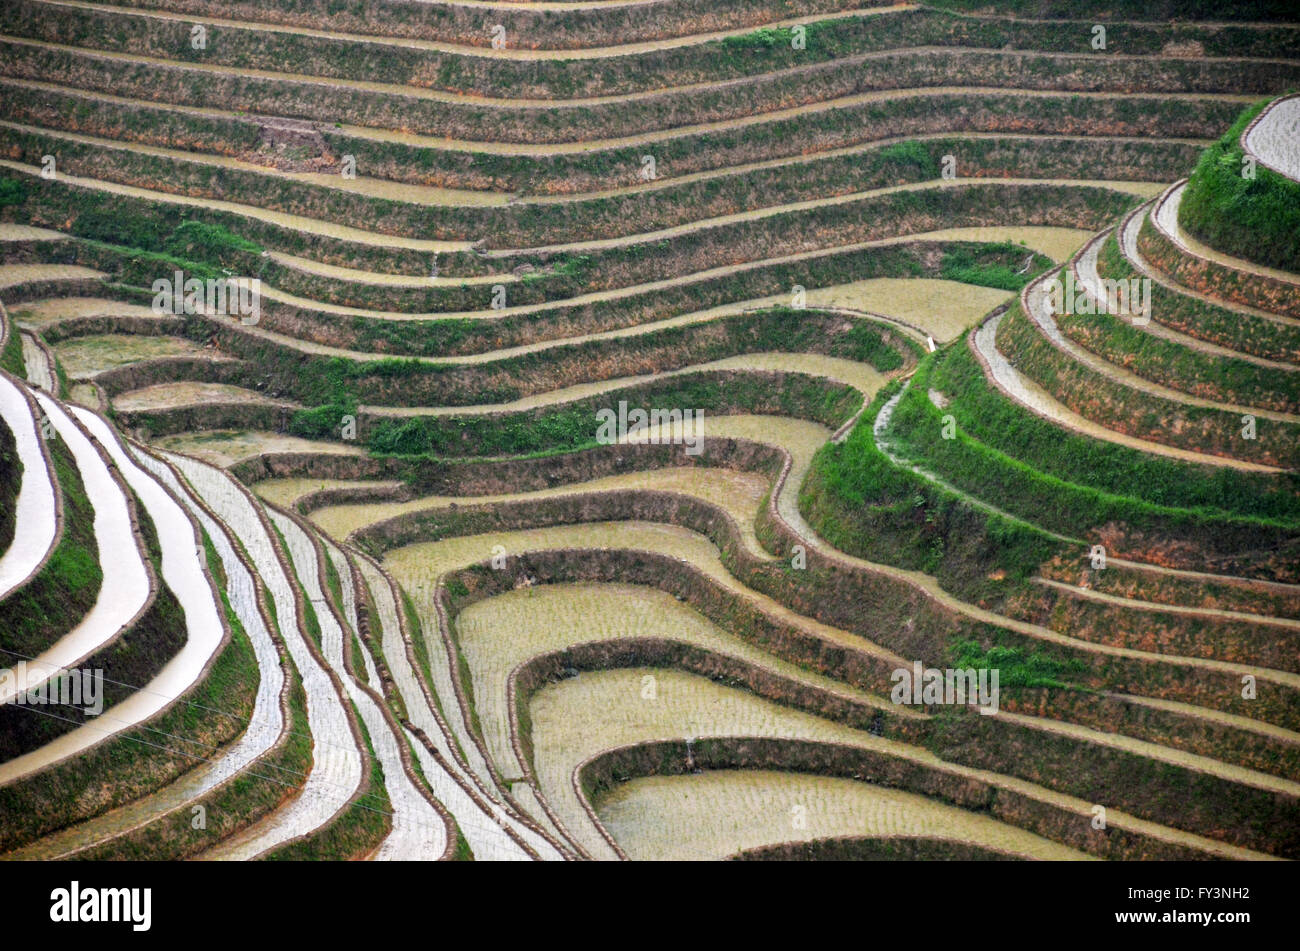 Dragon's Backbone rice terraces near Dazhai, China Stock Photo